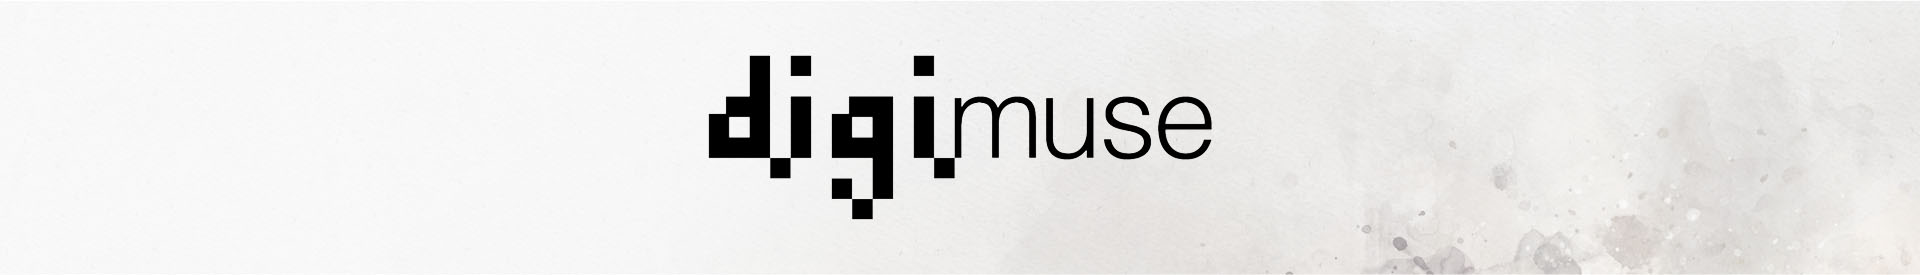 digimuse-header-banner